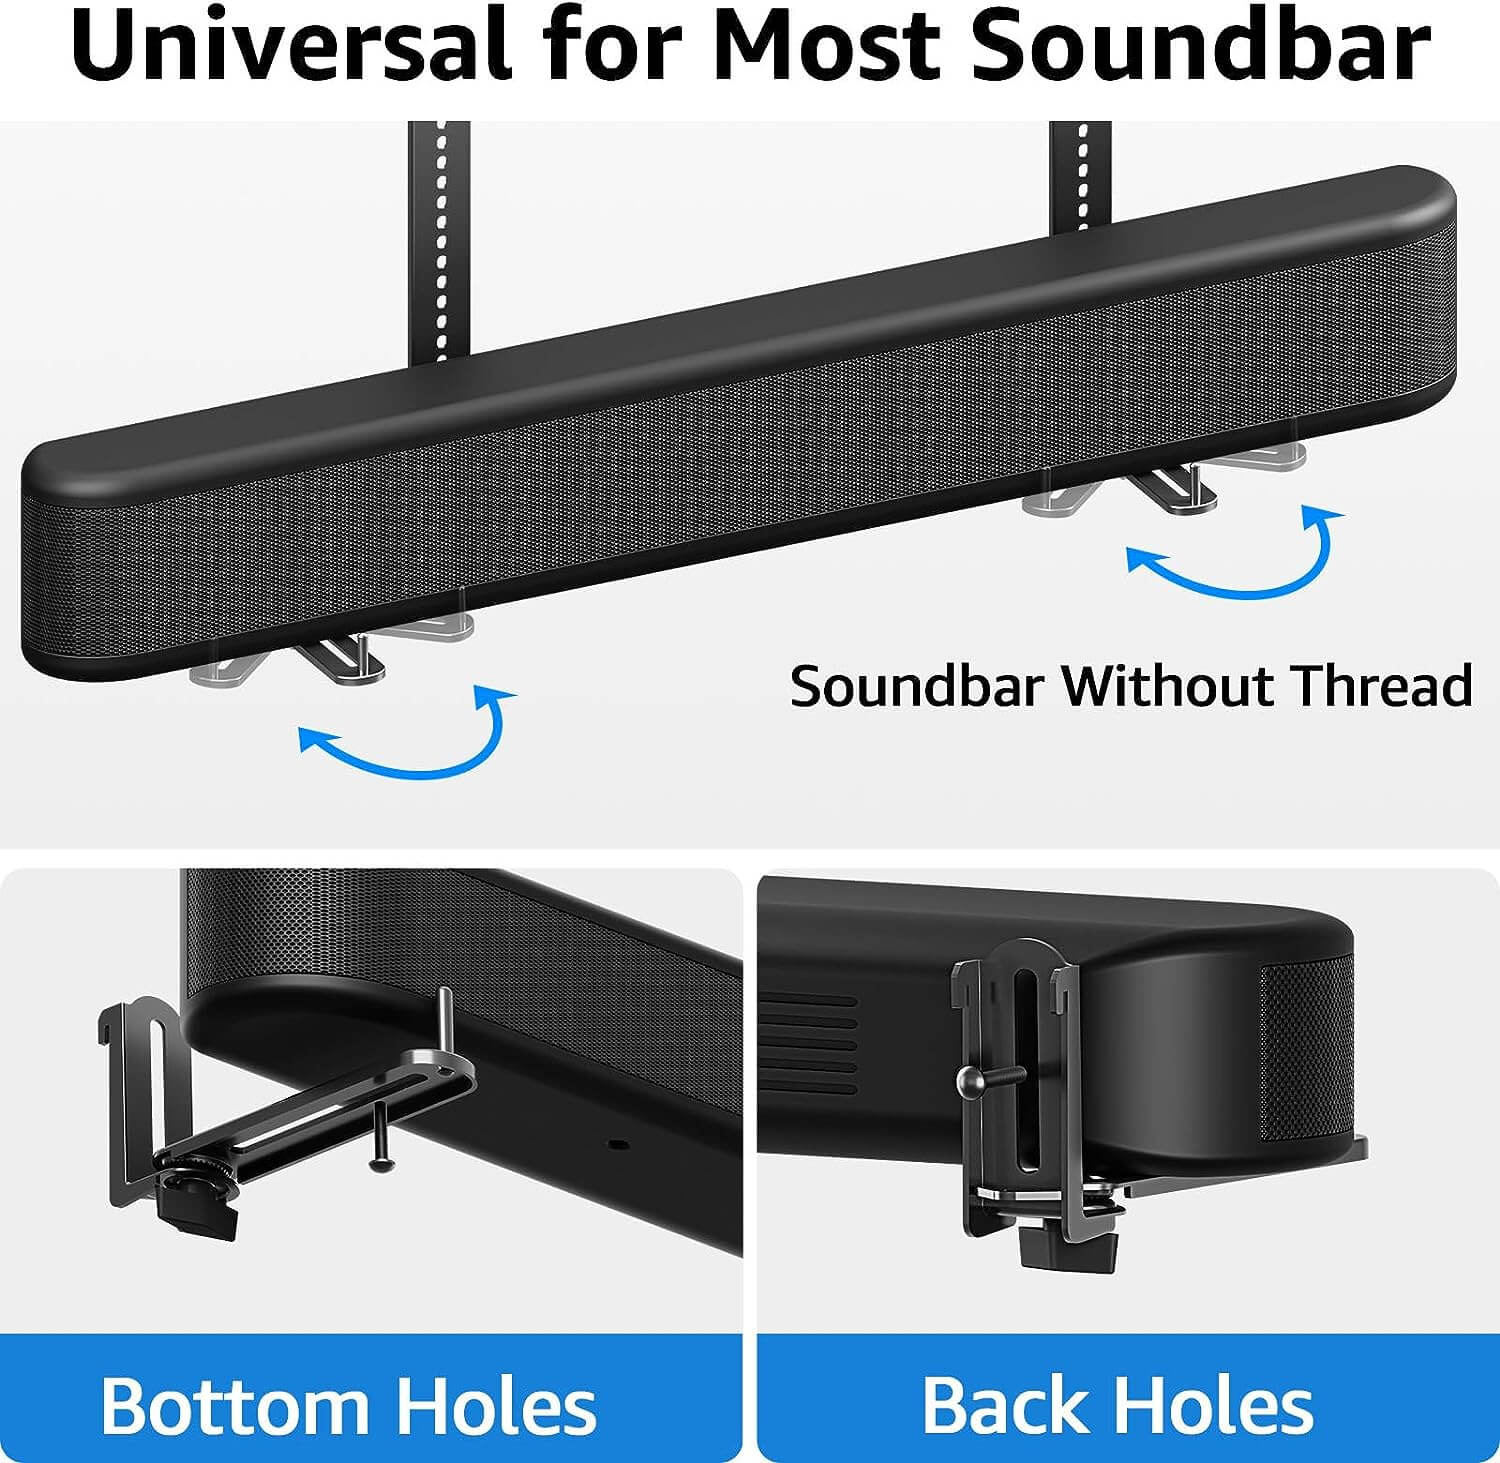 Universal Soundbar Mount Soundbar Bracket MUS-9121